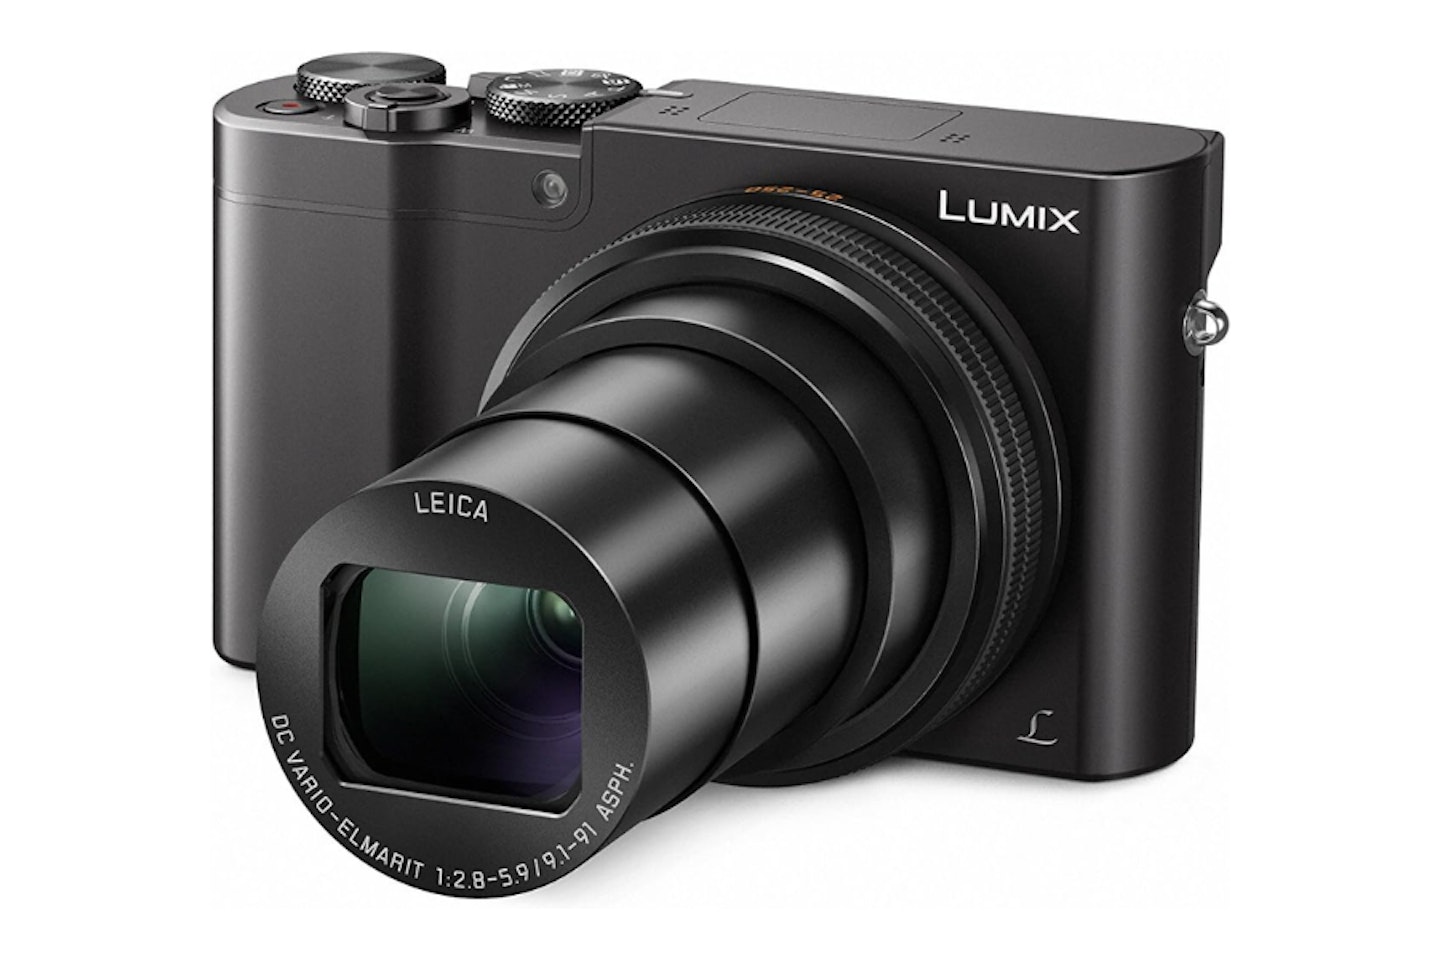 Panasonic Lumix DMC-TZ100- one of the best entry-level cameras